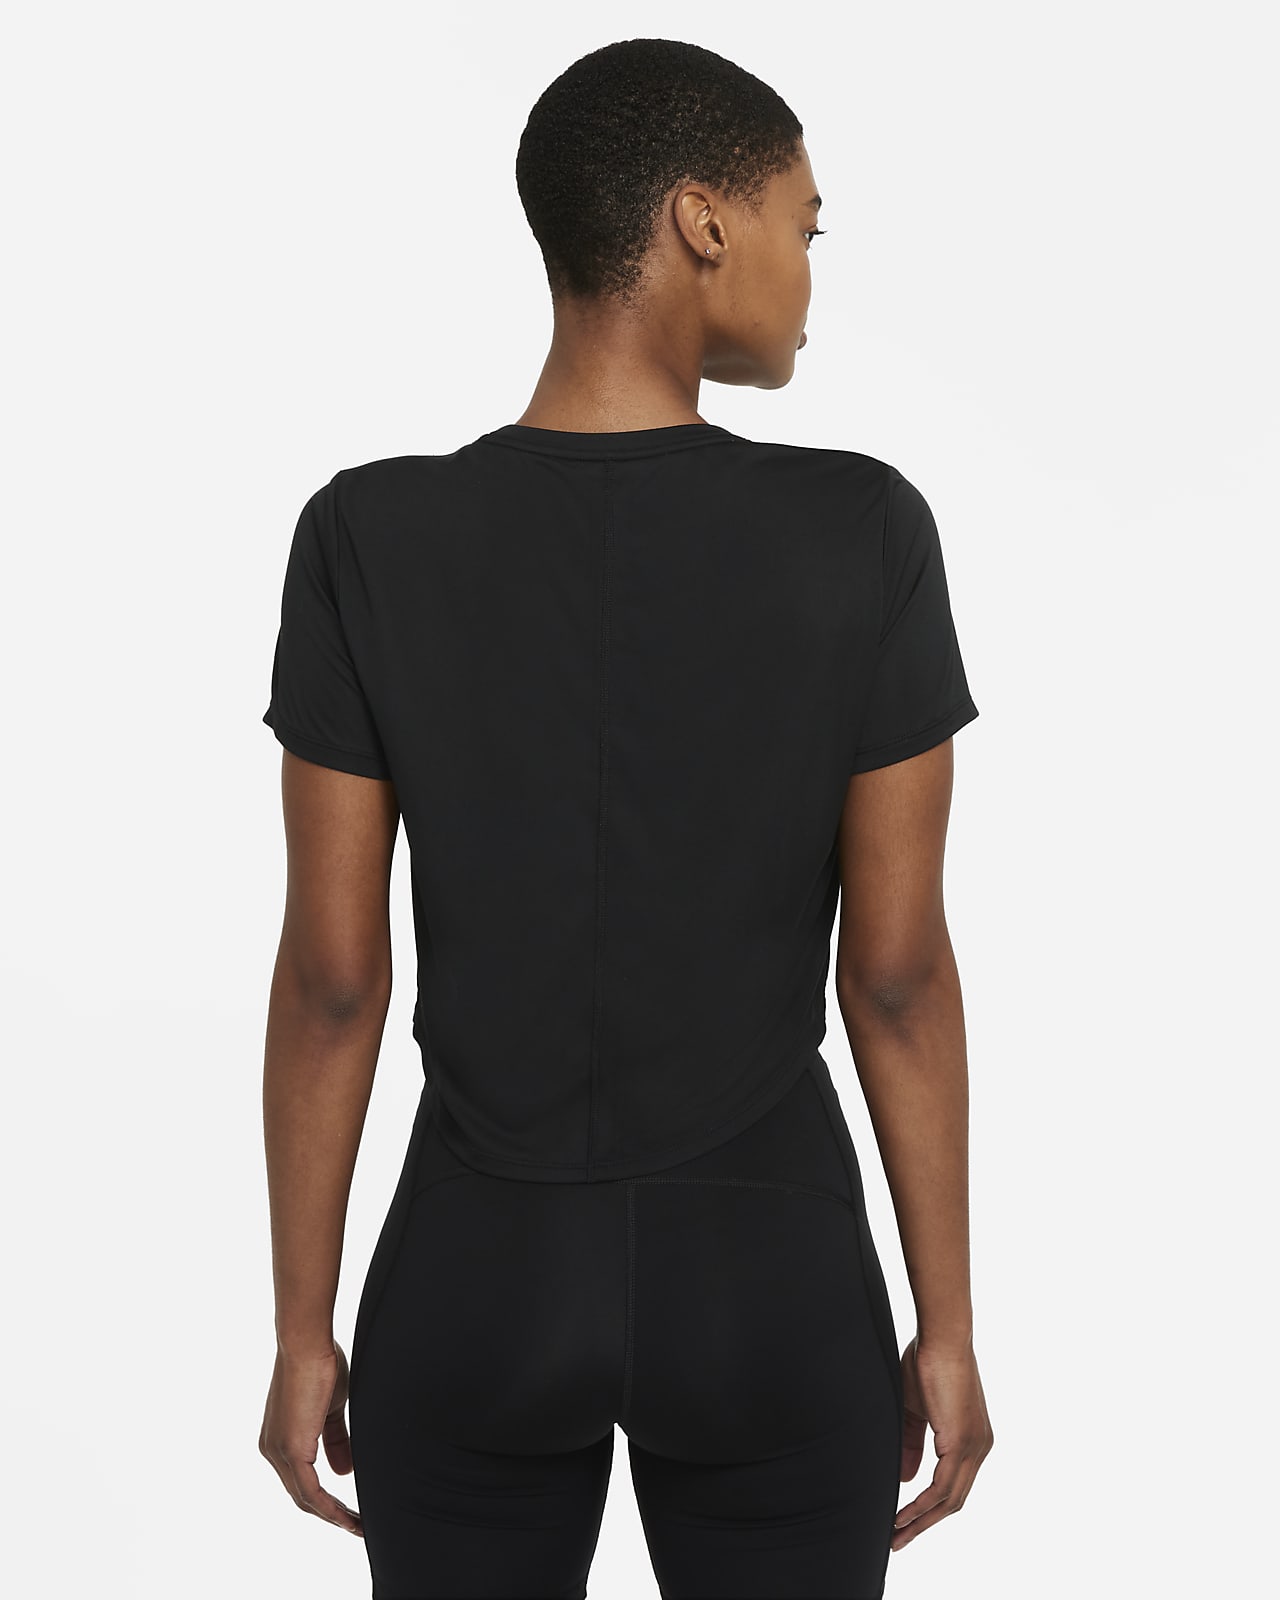 Nike One Classic Women's Dri-FIT Short-Sleeve Cropped Twist Top. Nike ID